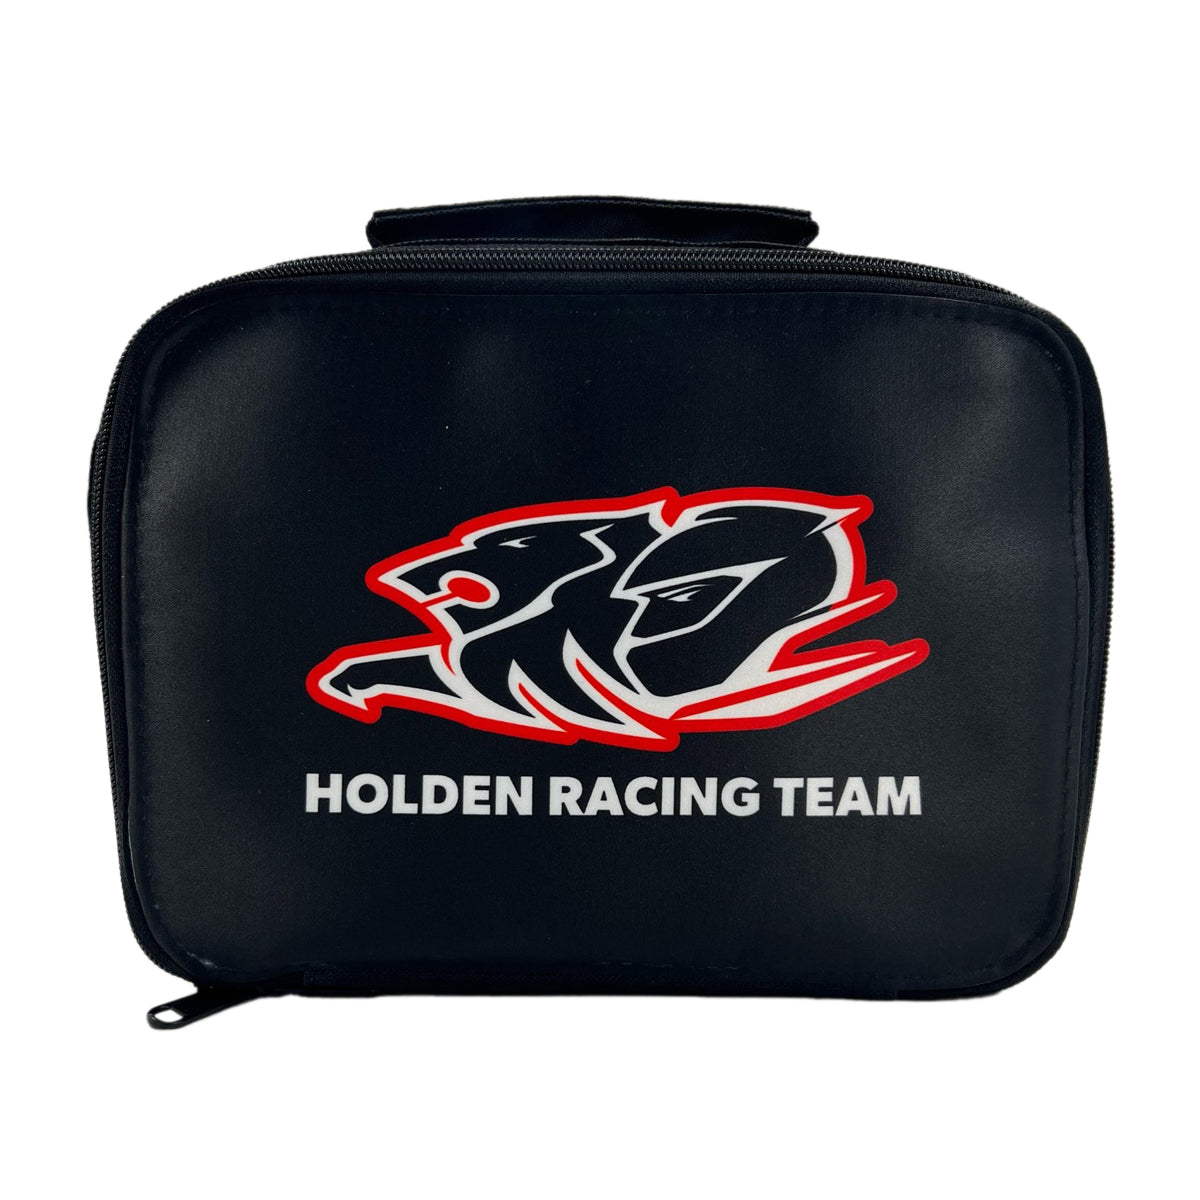 Holden Racing Team Lunch Cooler